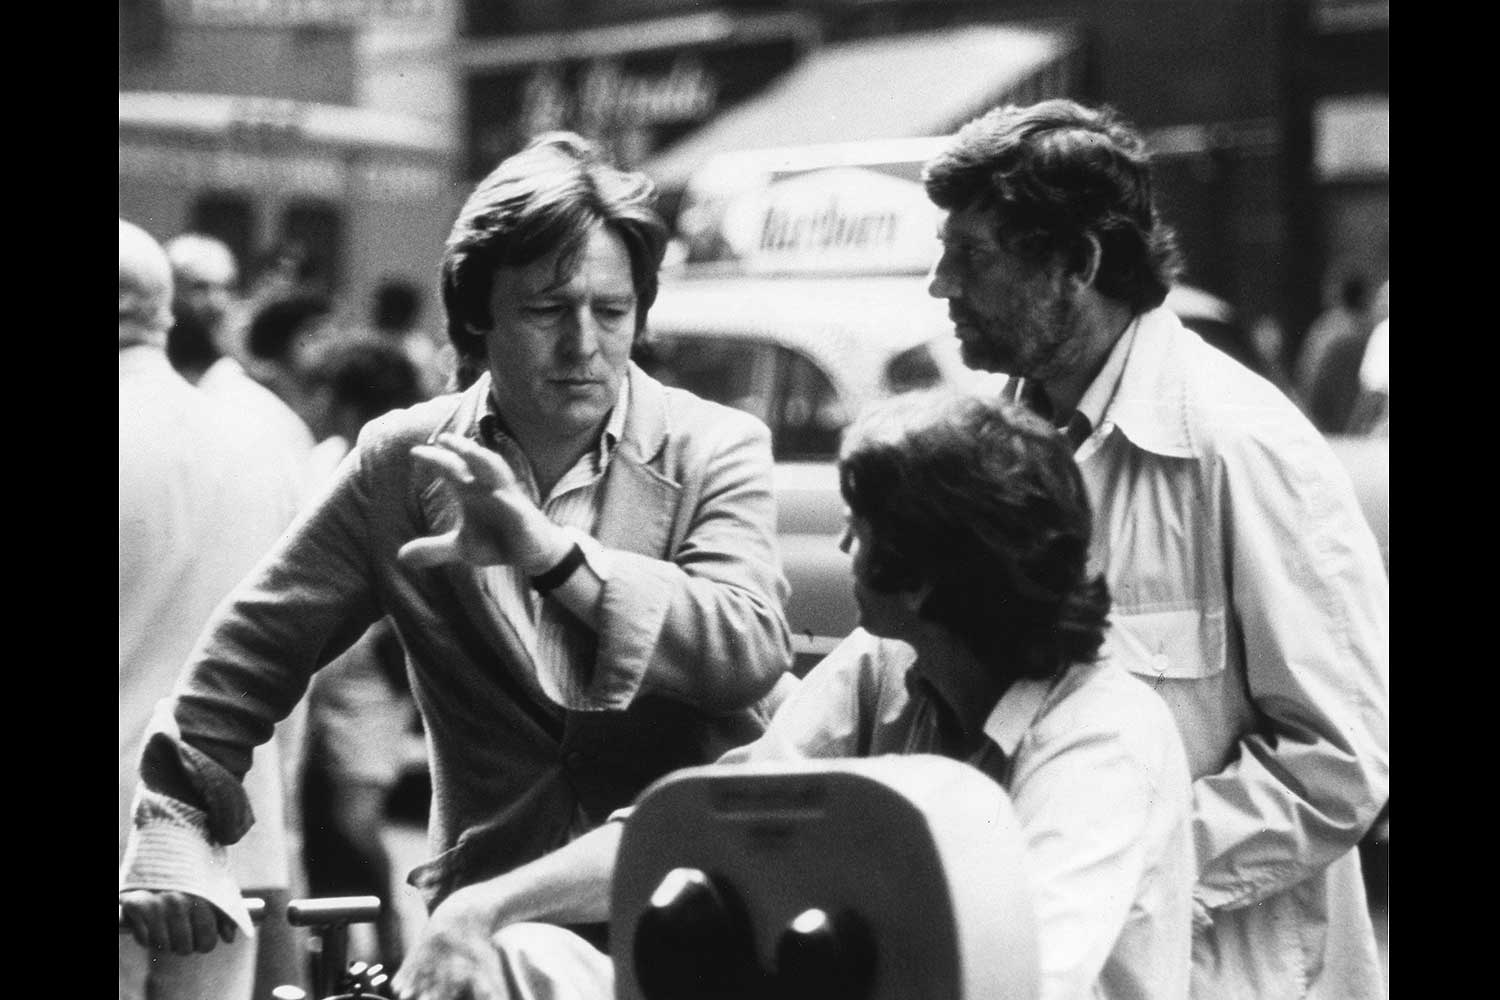 Alan Marshall, Alan Marshall, Michael Seresin from the film Fame, 1980